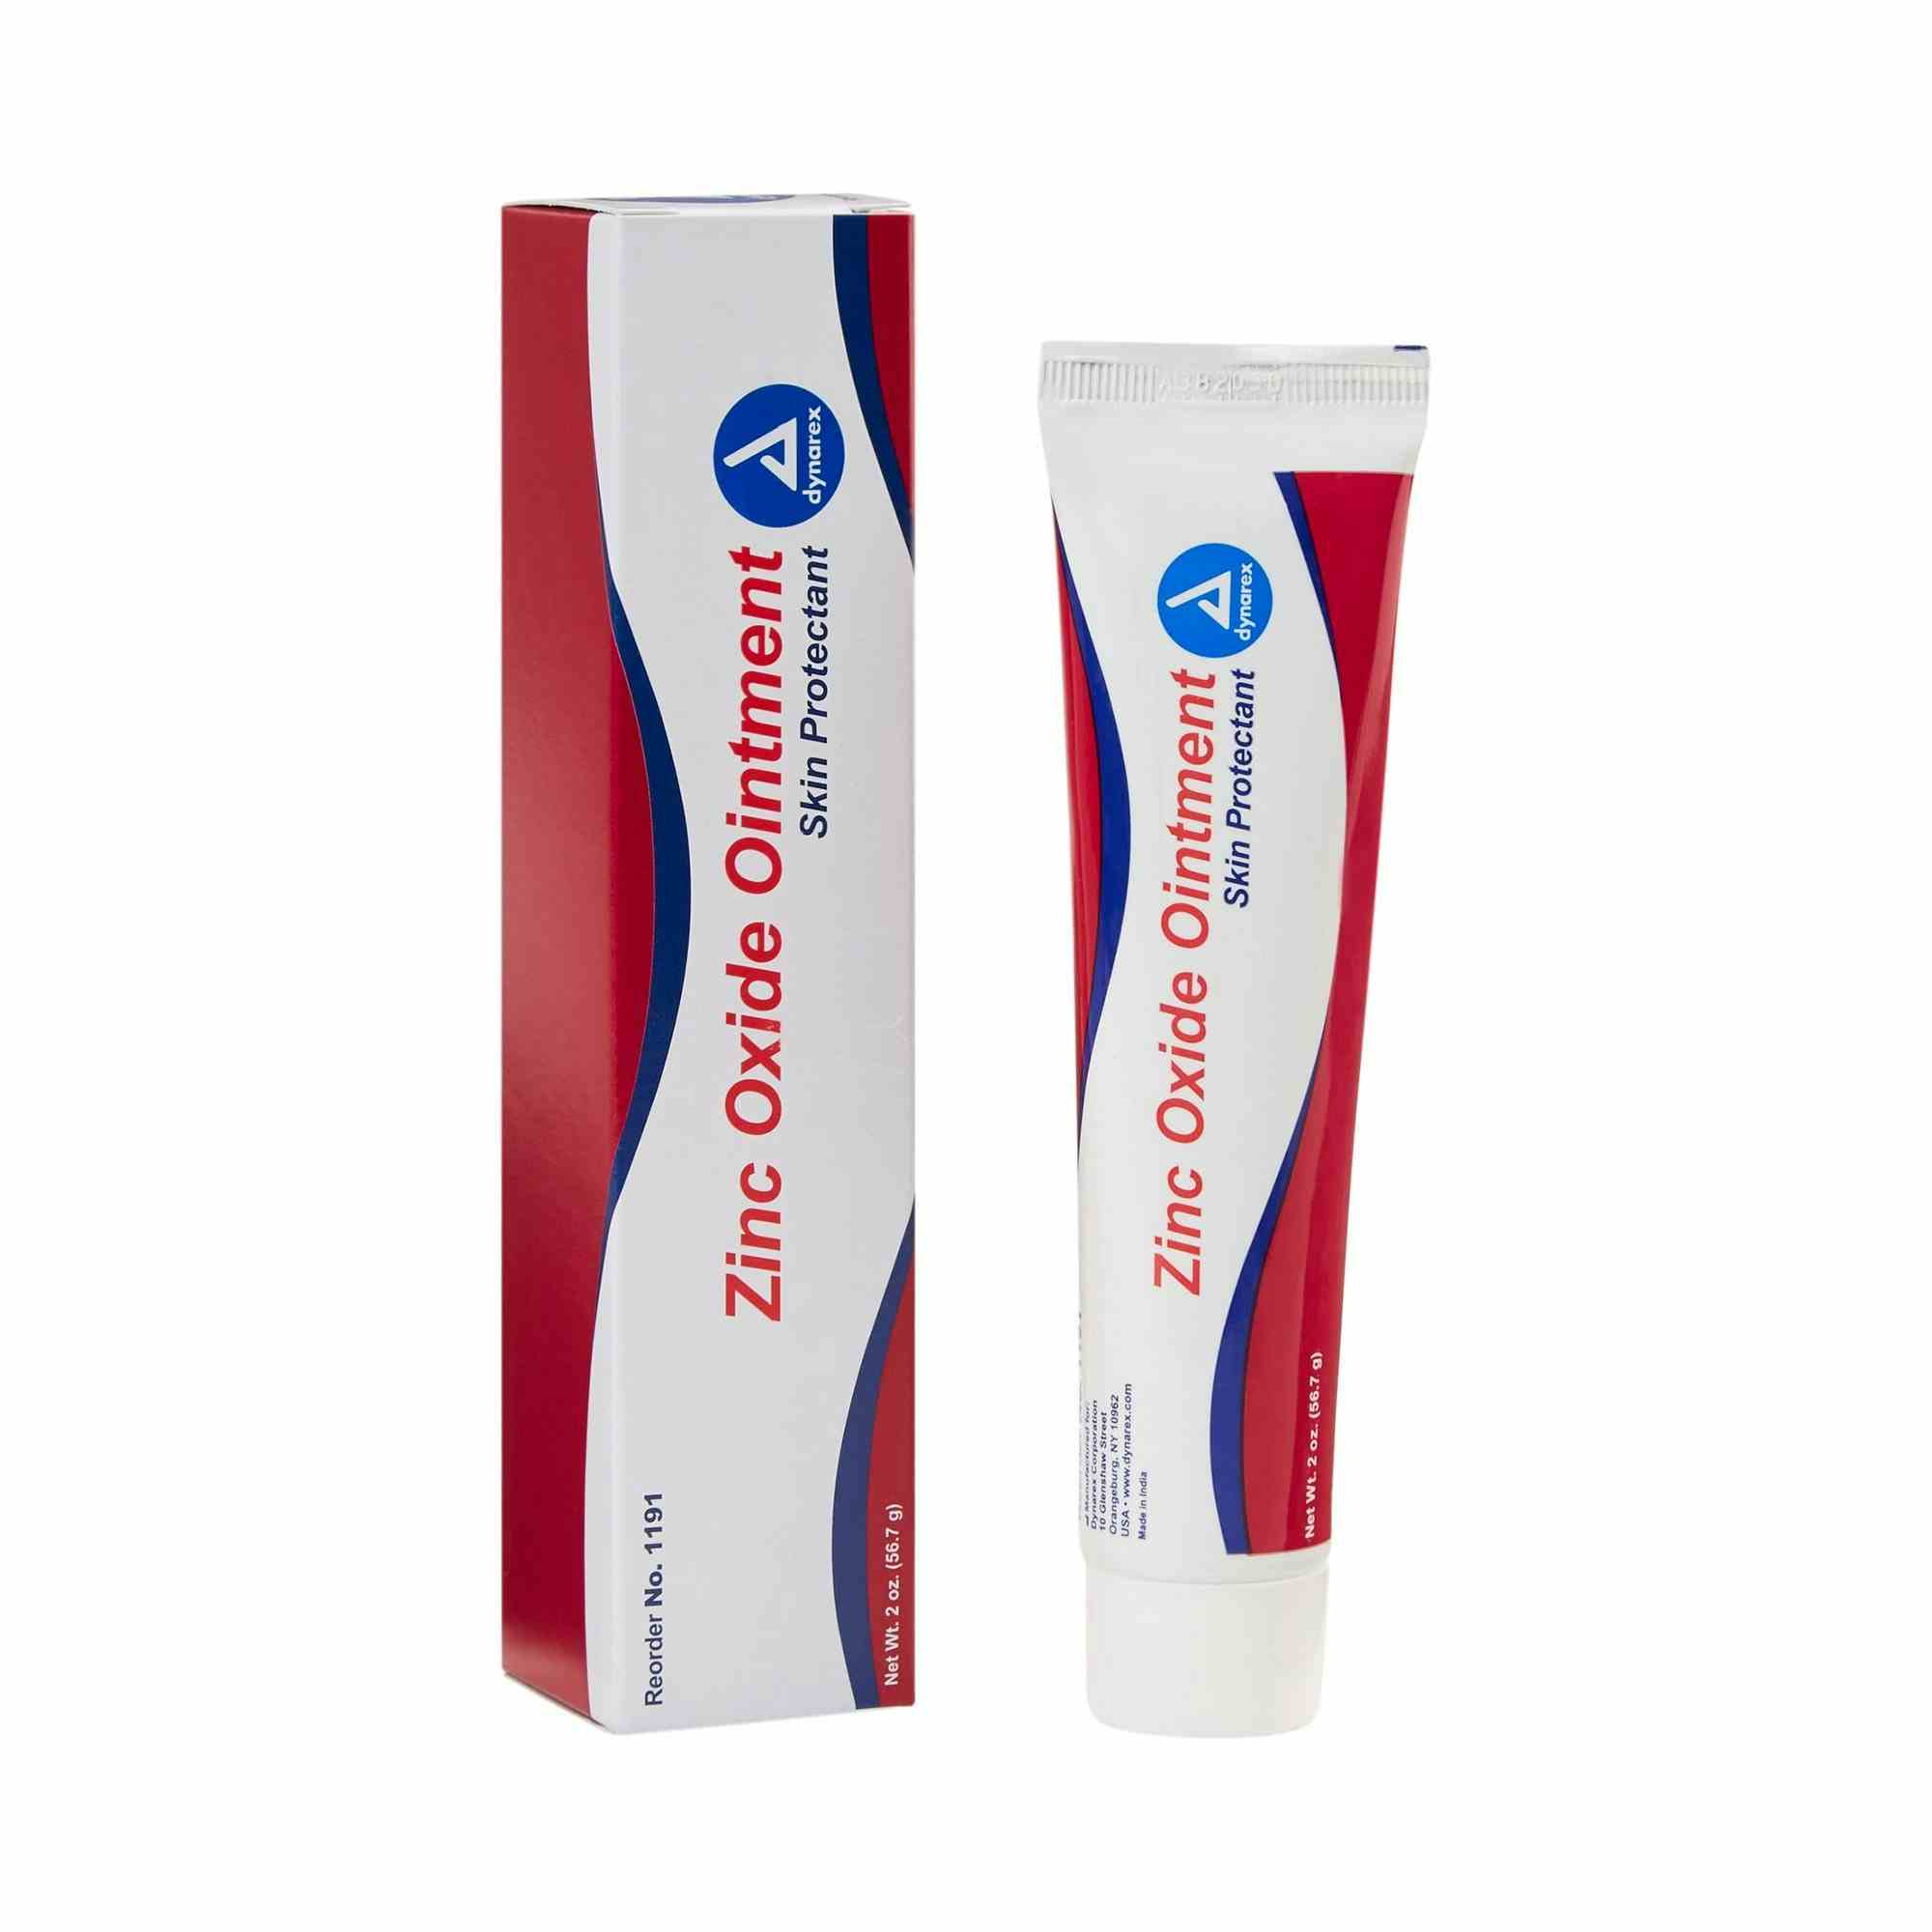 Dynarex Zinc Oxide Ointment Skin Protectant, 2 oz., 1191, 1 Each